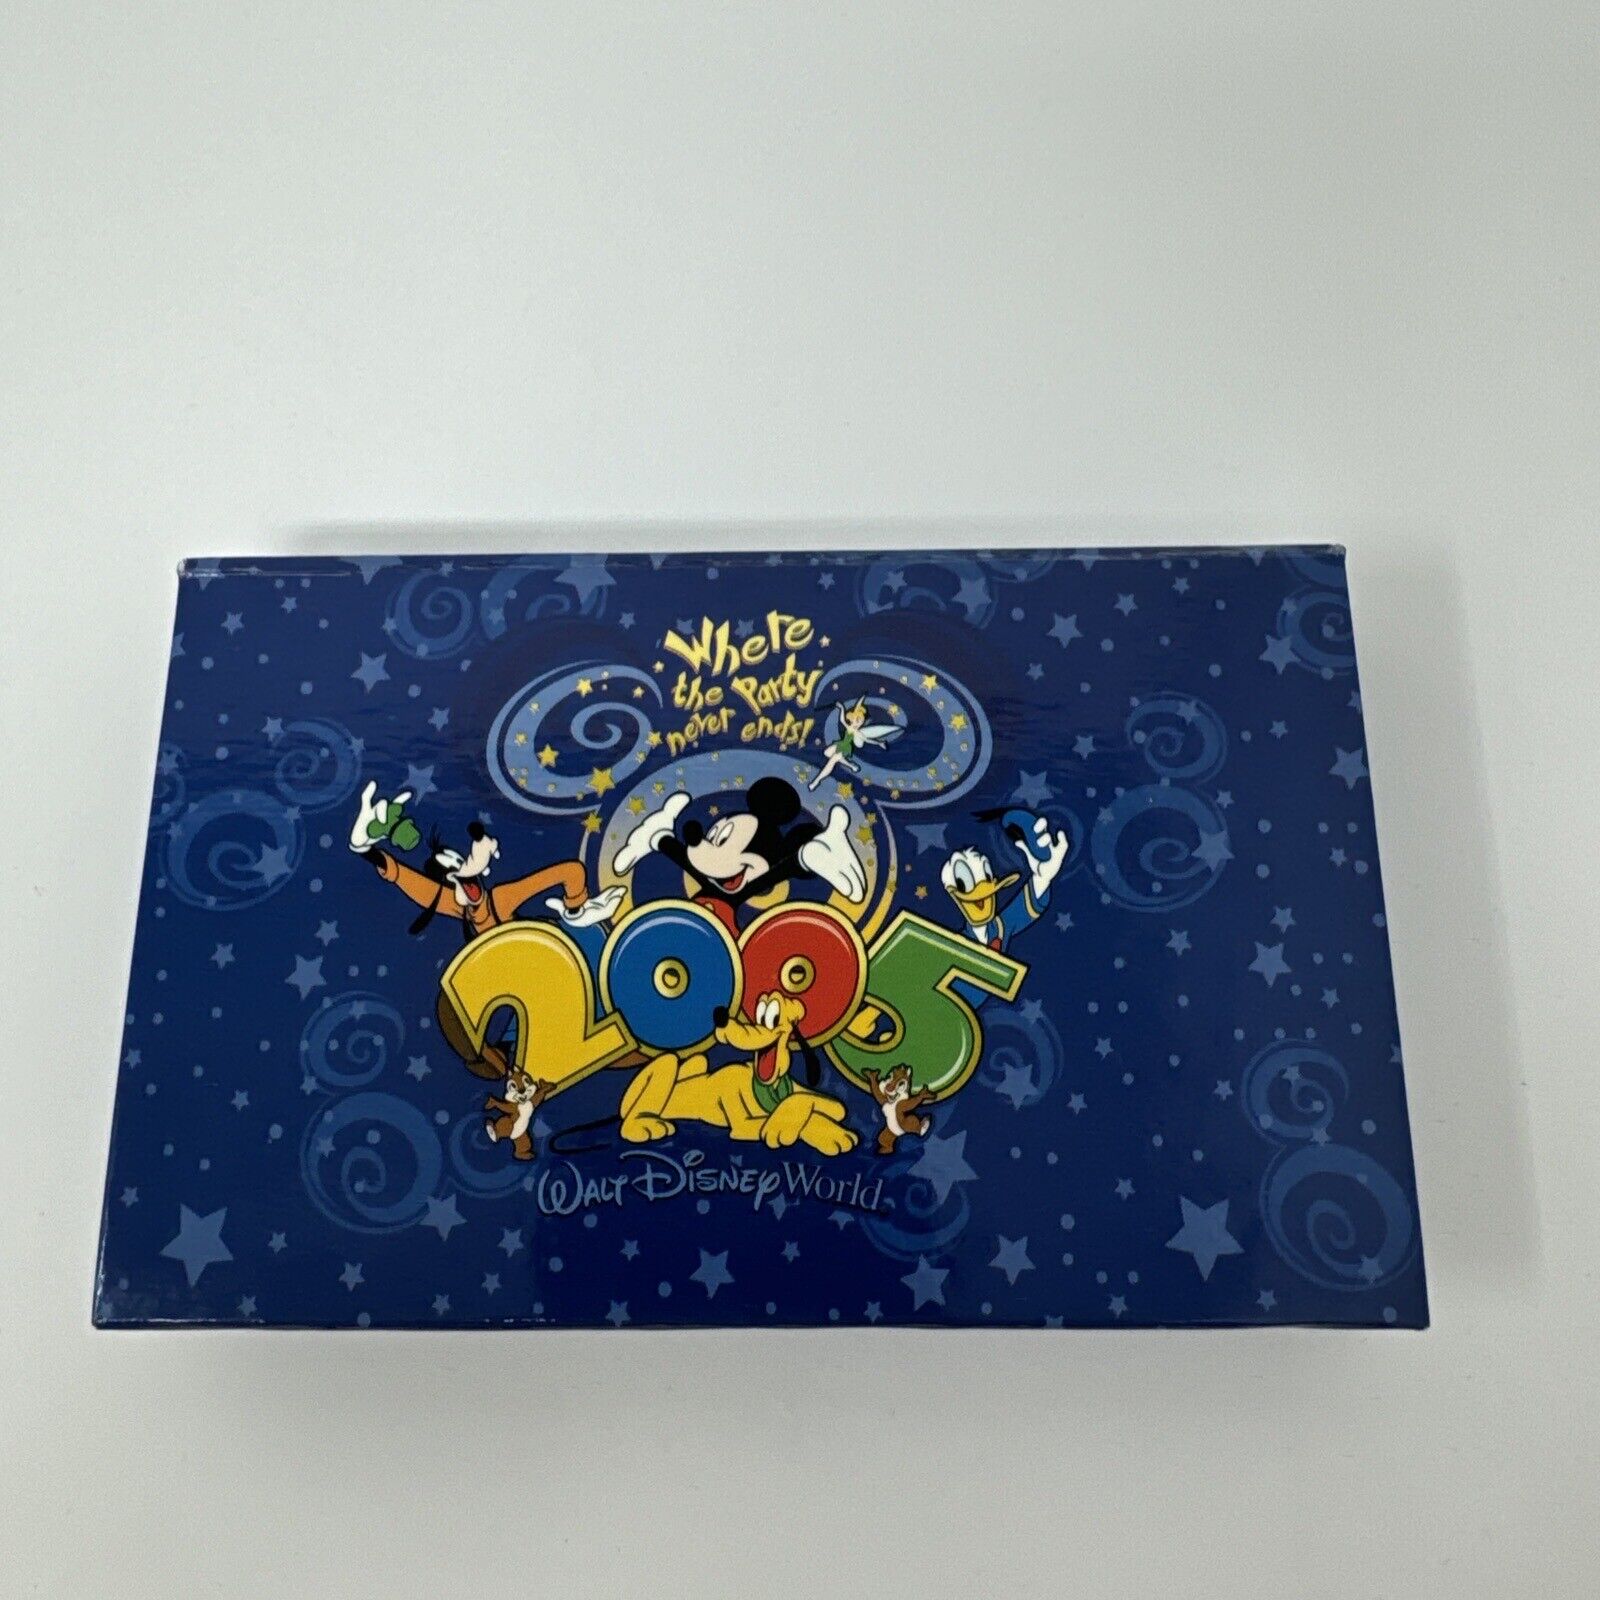 Original 2005 Walt Disney World Boxed Pin Set. Mint condition